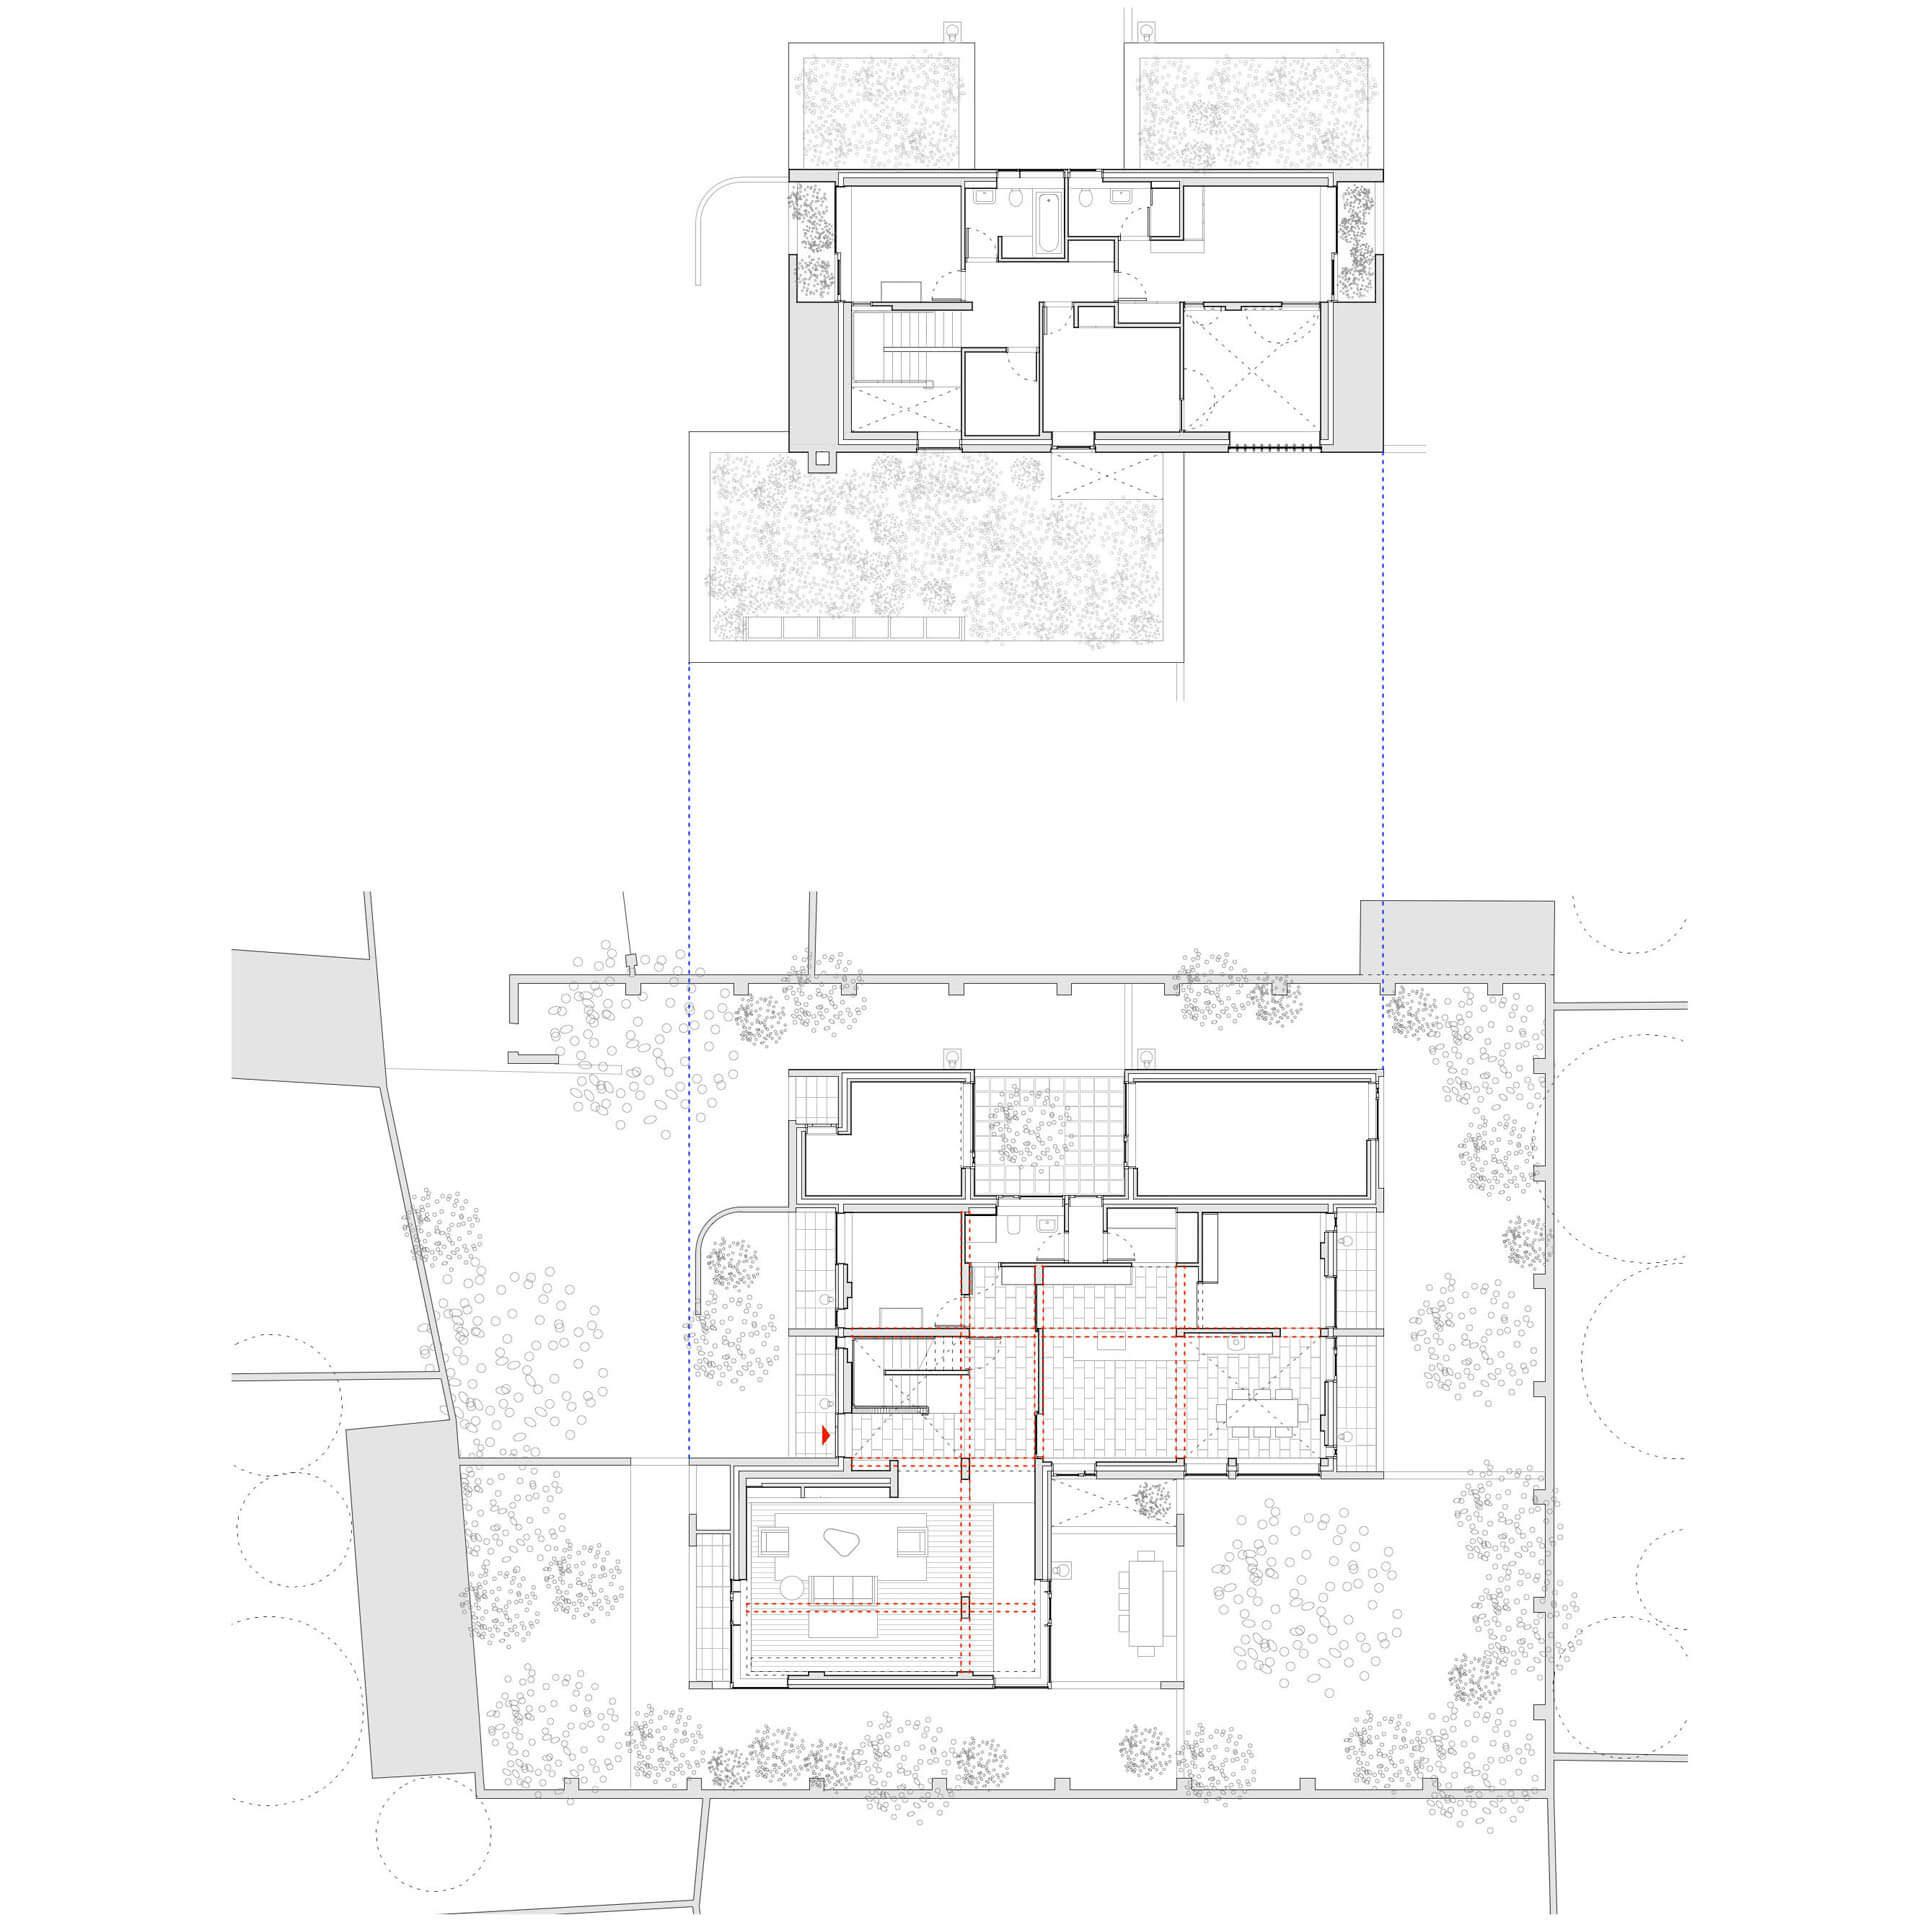 Steve Larkin Architects - 07_Kimmage_Plans_Scale 1;250 